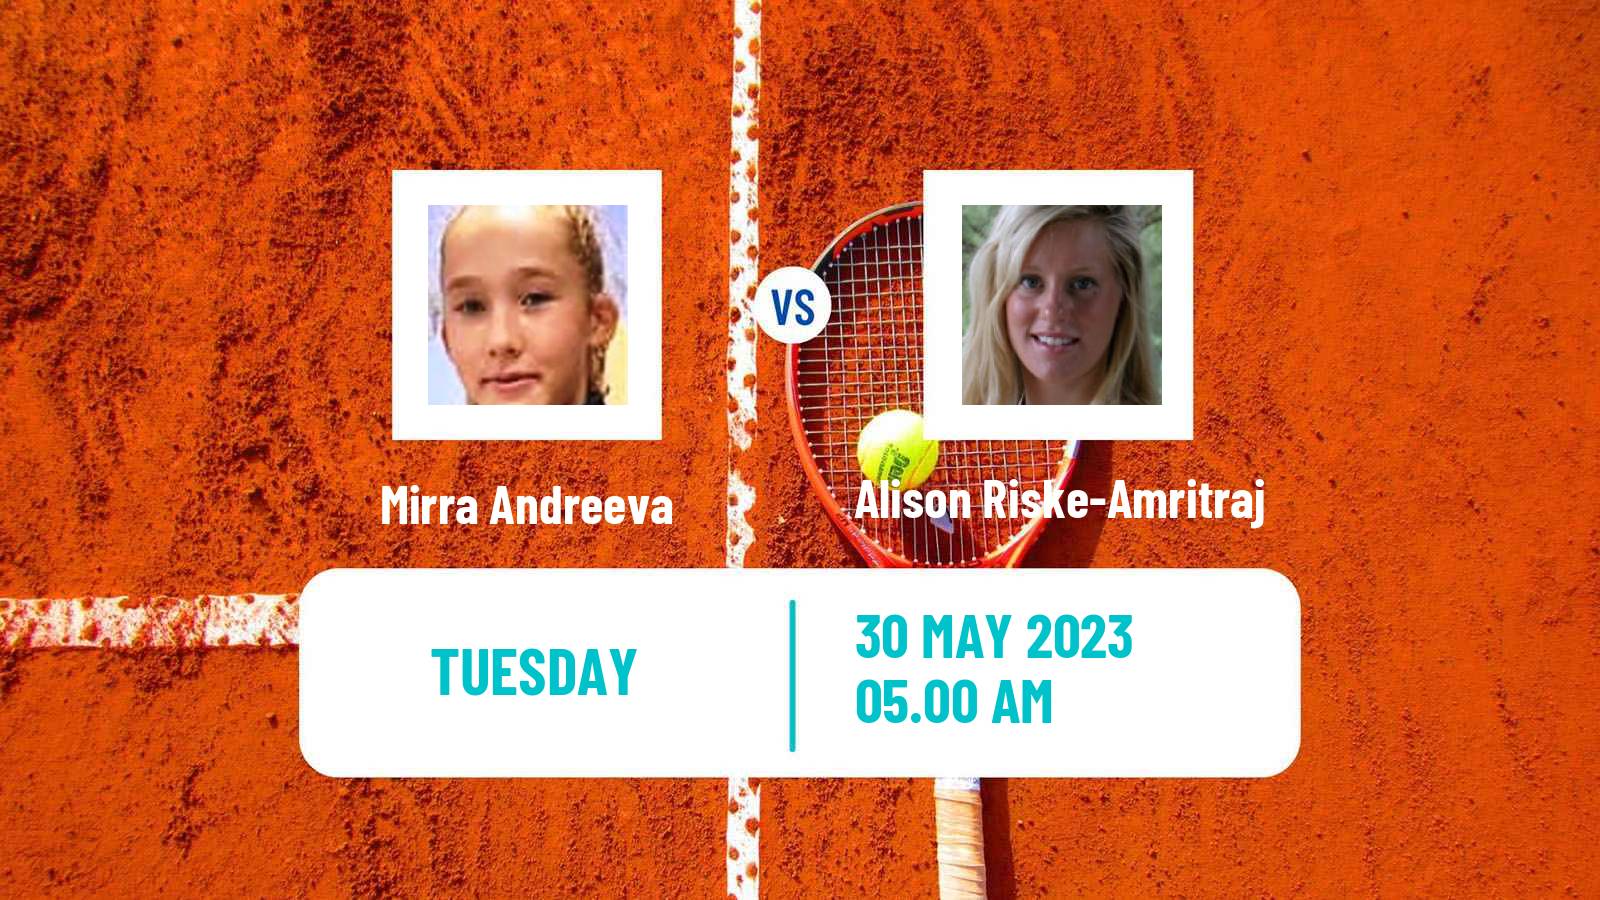 Tennis WTA Roland Garros Mirra Andreeva - Alison Riske-Amritraj